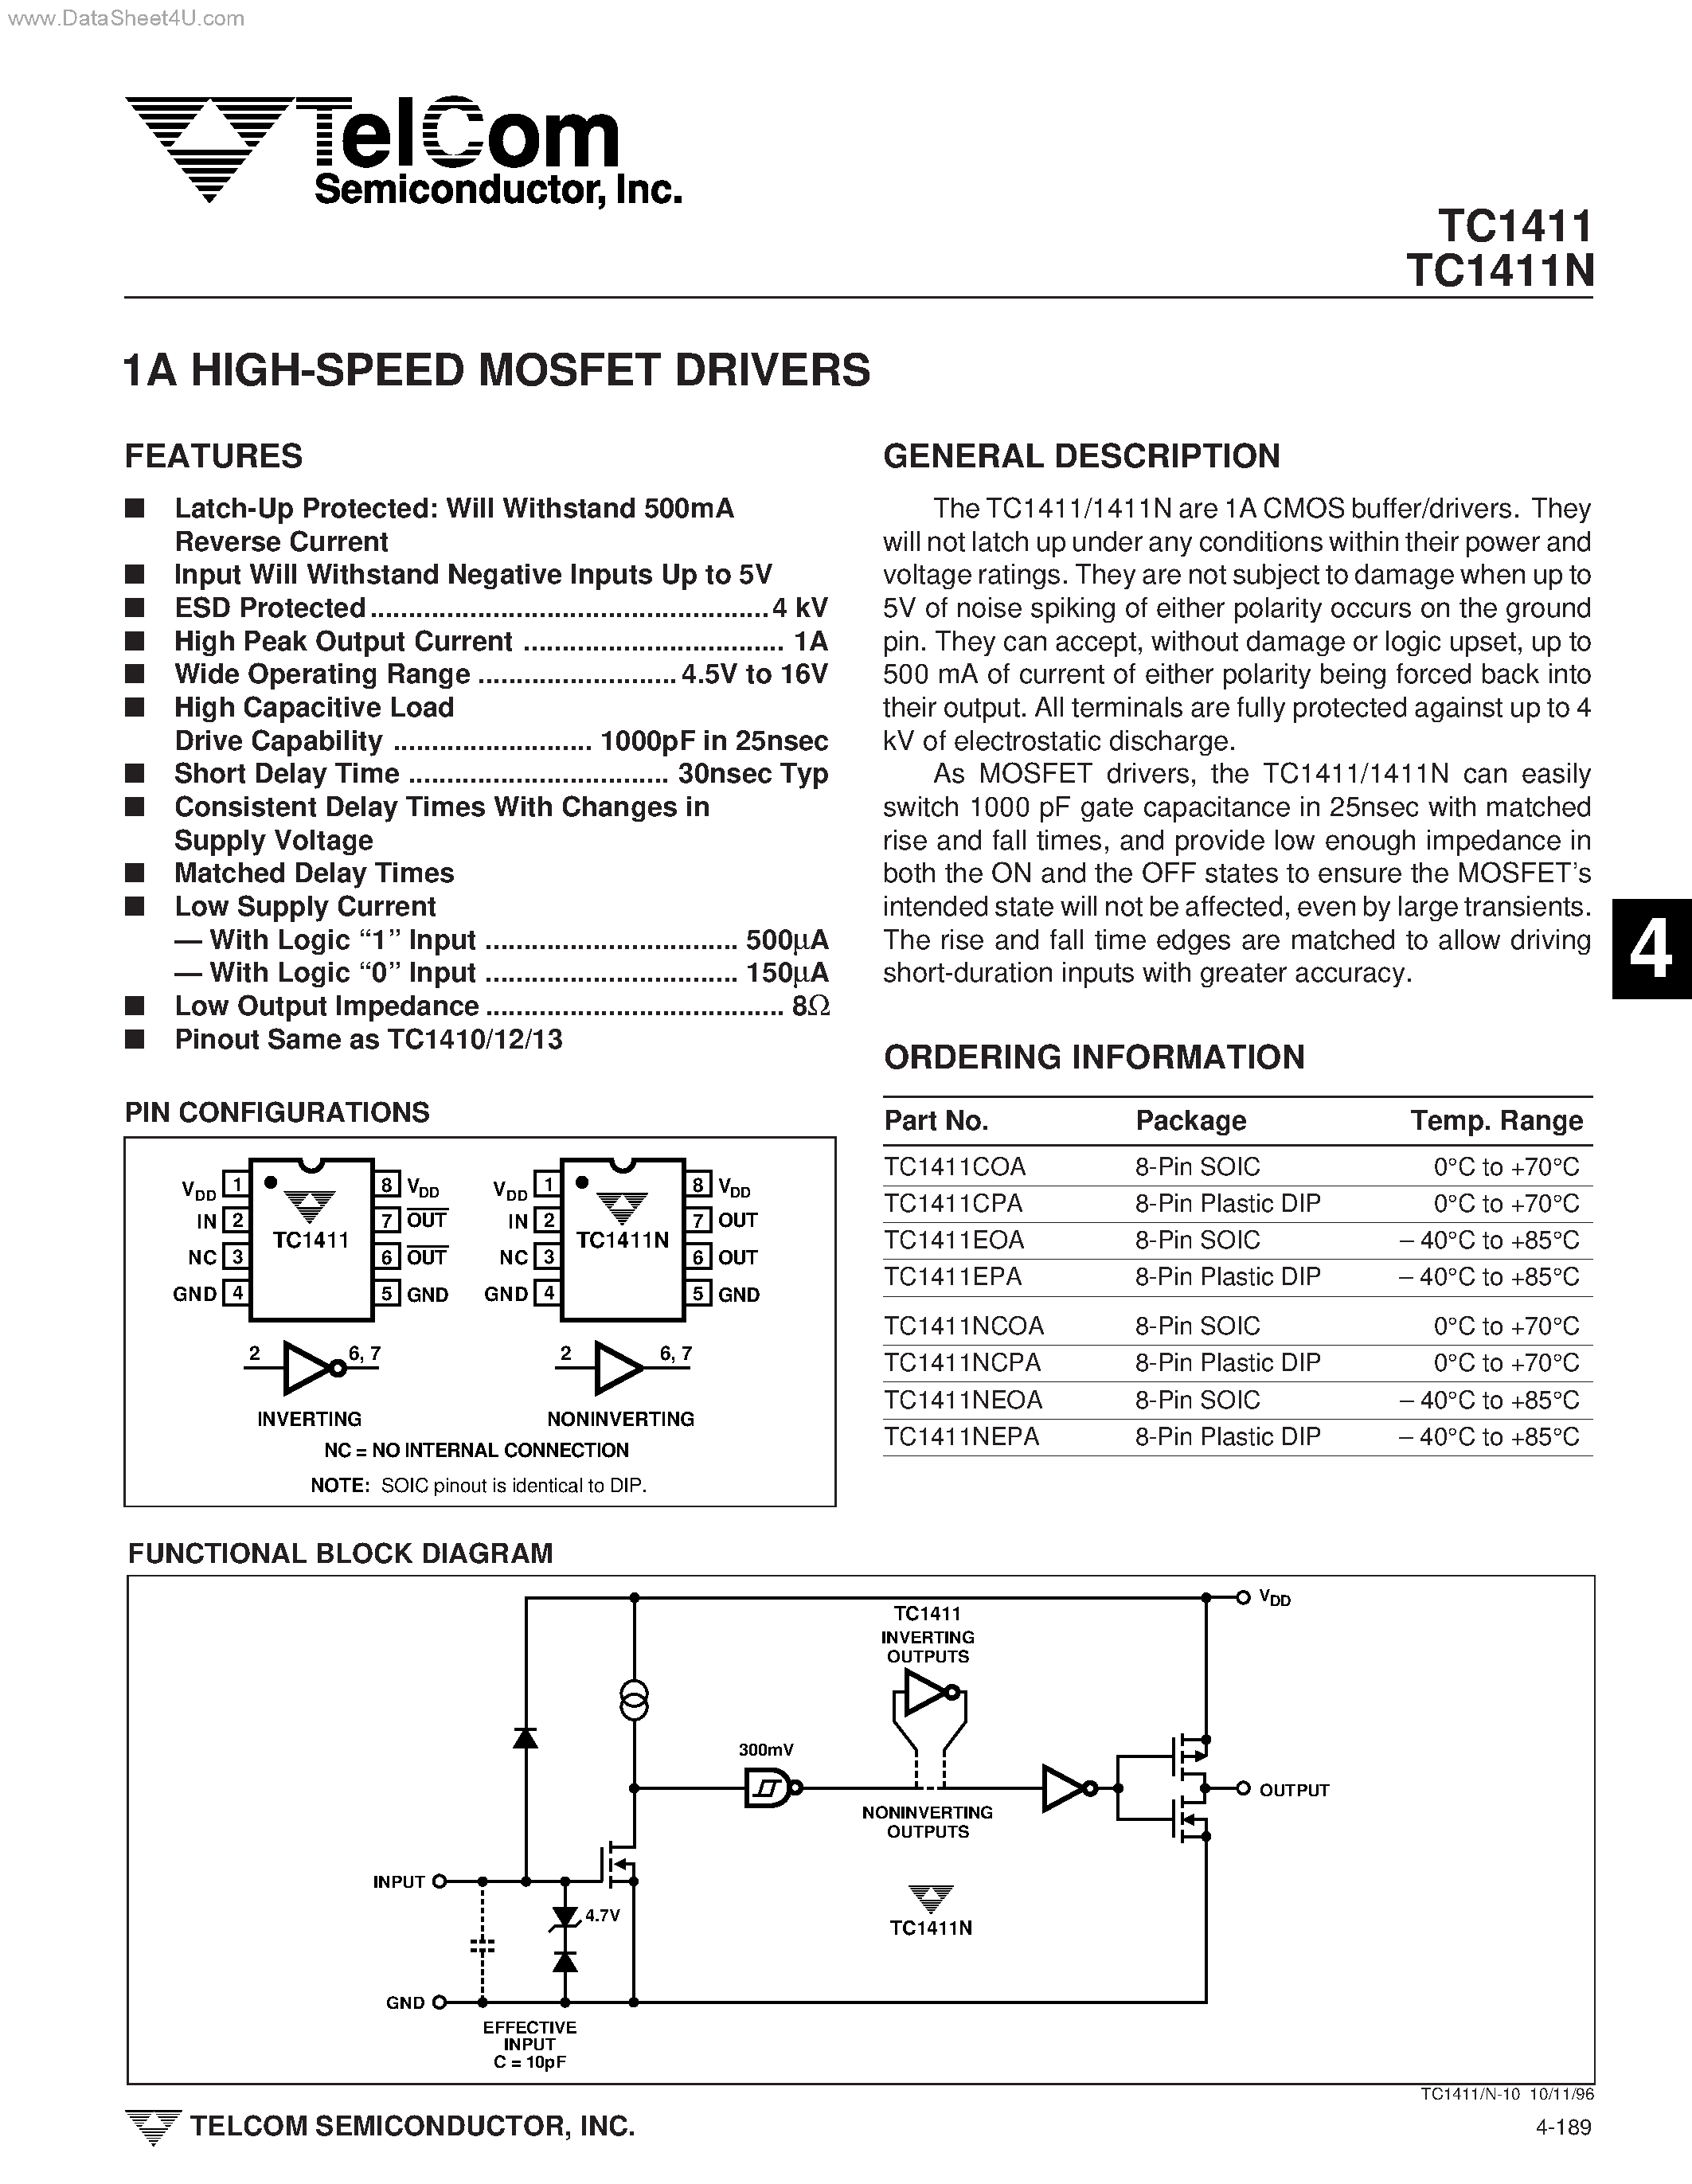 Даташит TC1411 - HIGH-SPEED MOSFET DRIVERS страница 1